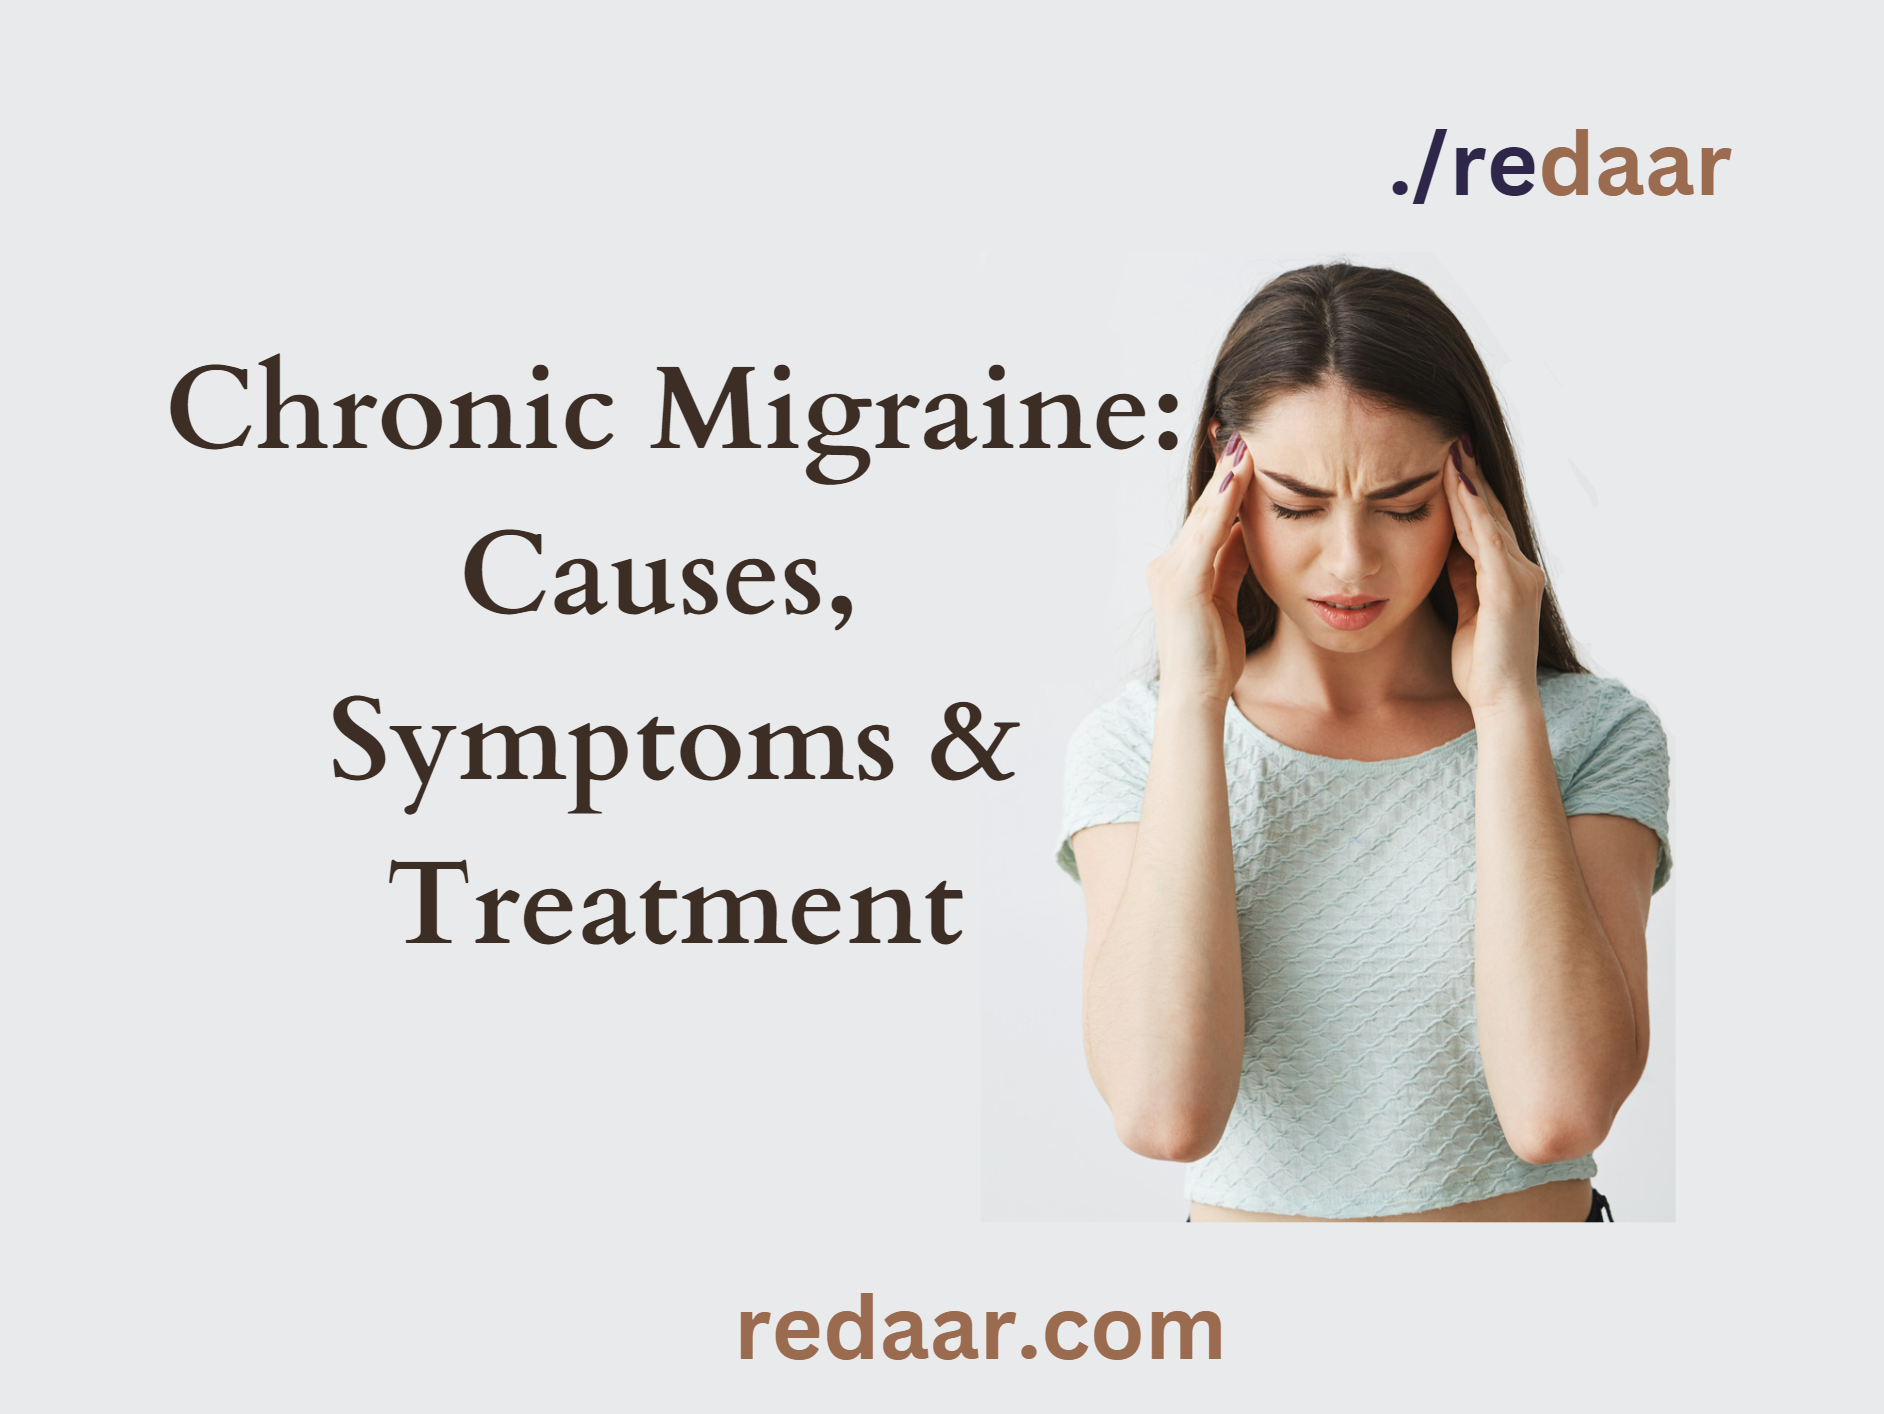 Chronic Migraine: Causes, Symptoms & Treatment